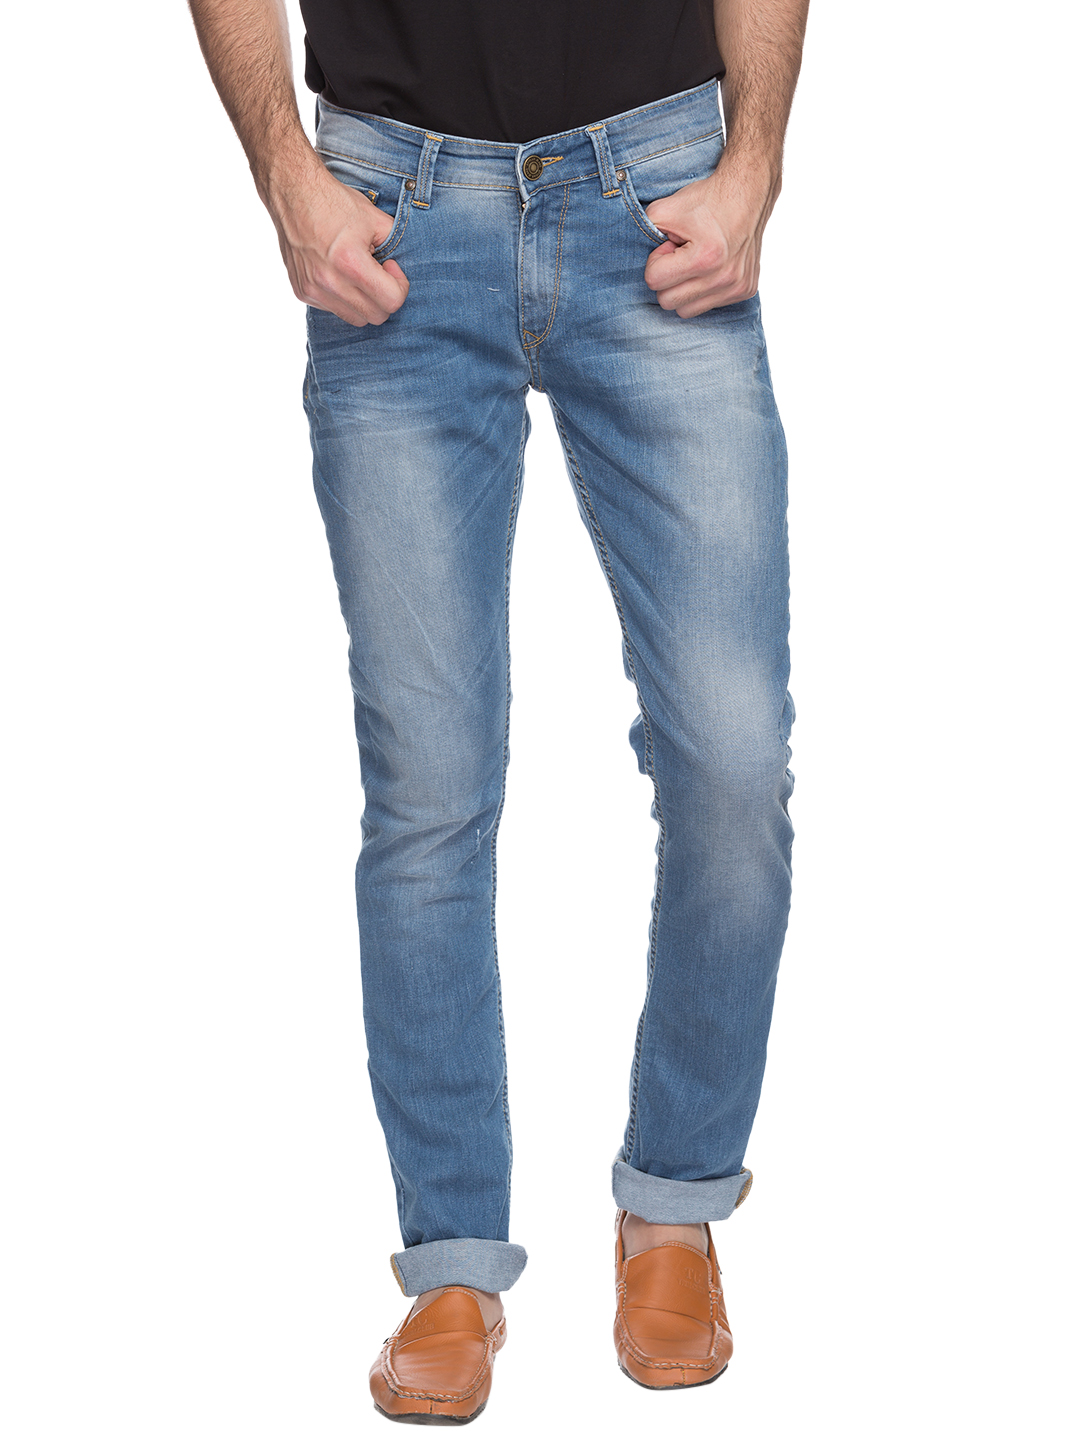 Buy Spykar Men's Blue Skinny Fit Jeans Online @ ₹1249 from ShopClues